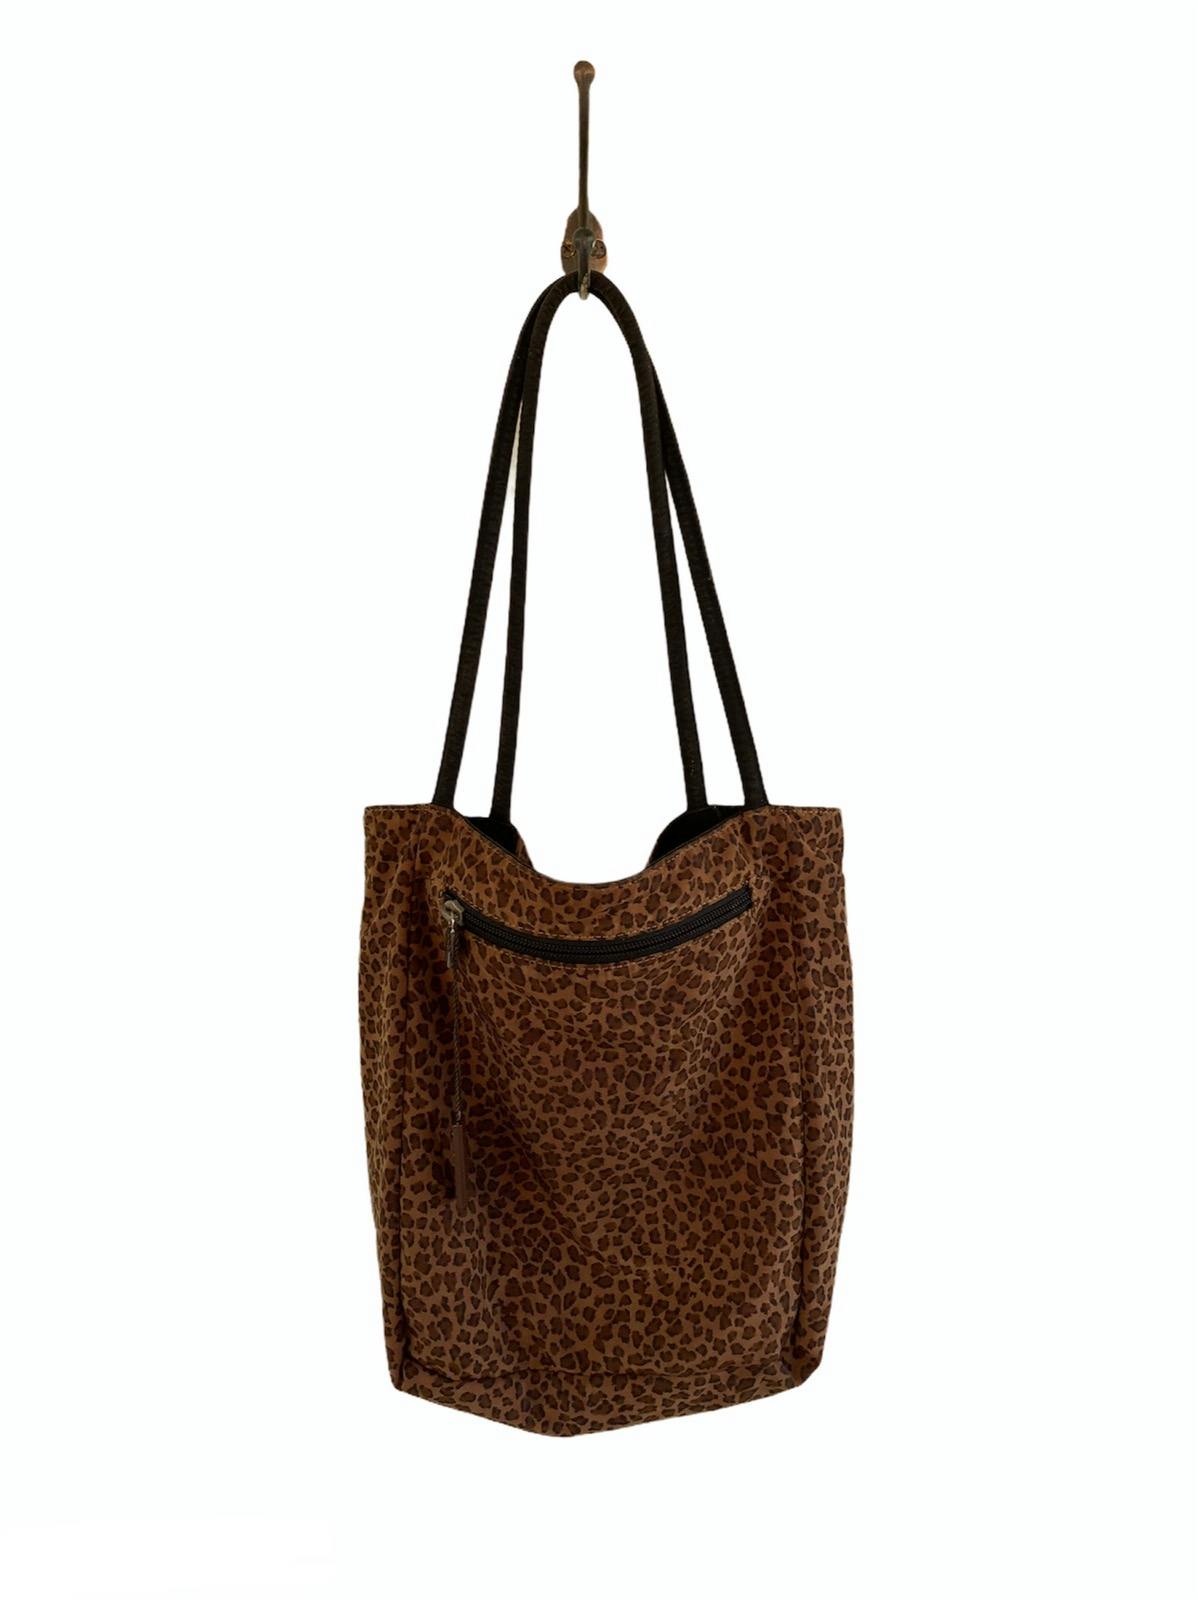 Bottega Veneta Leopard Tote Bag - 2